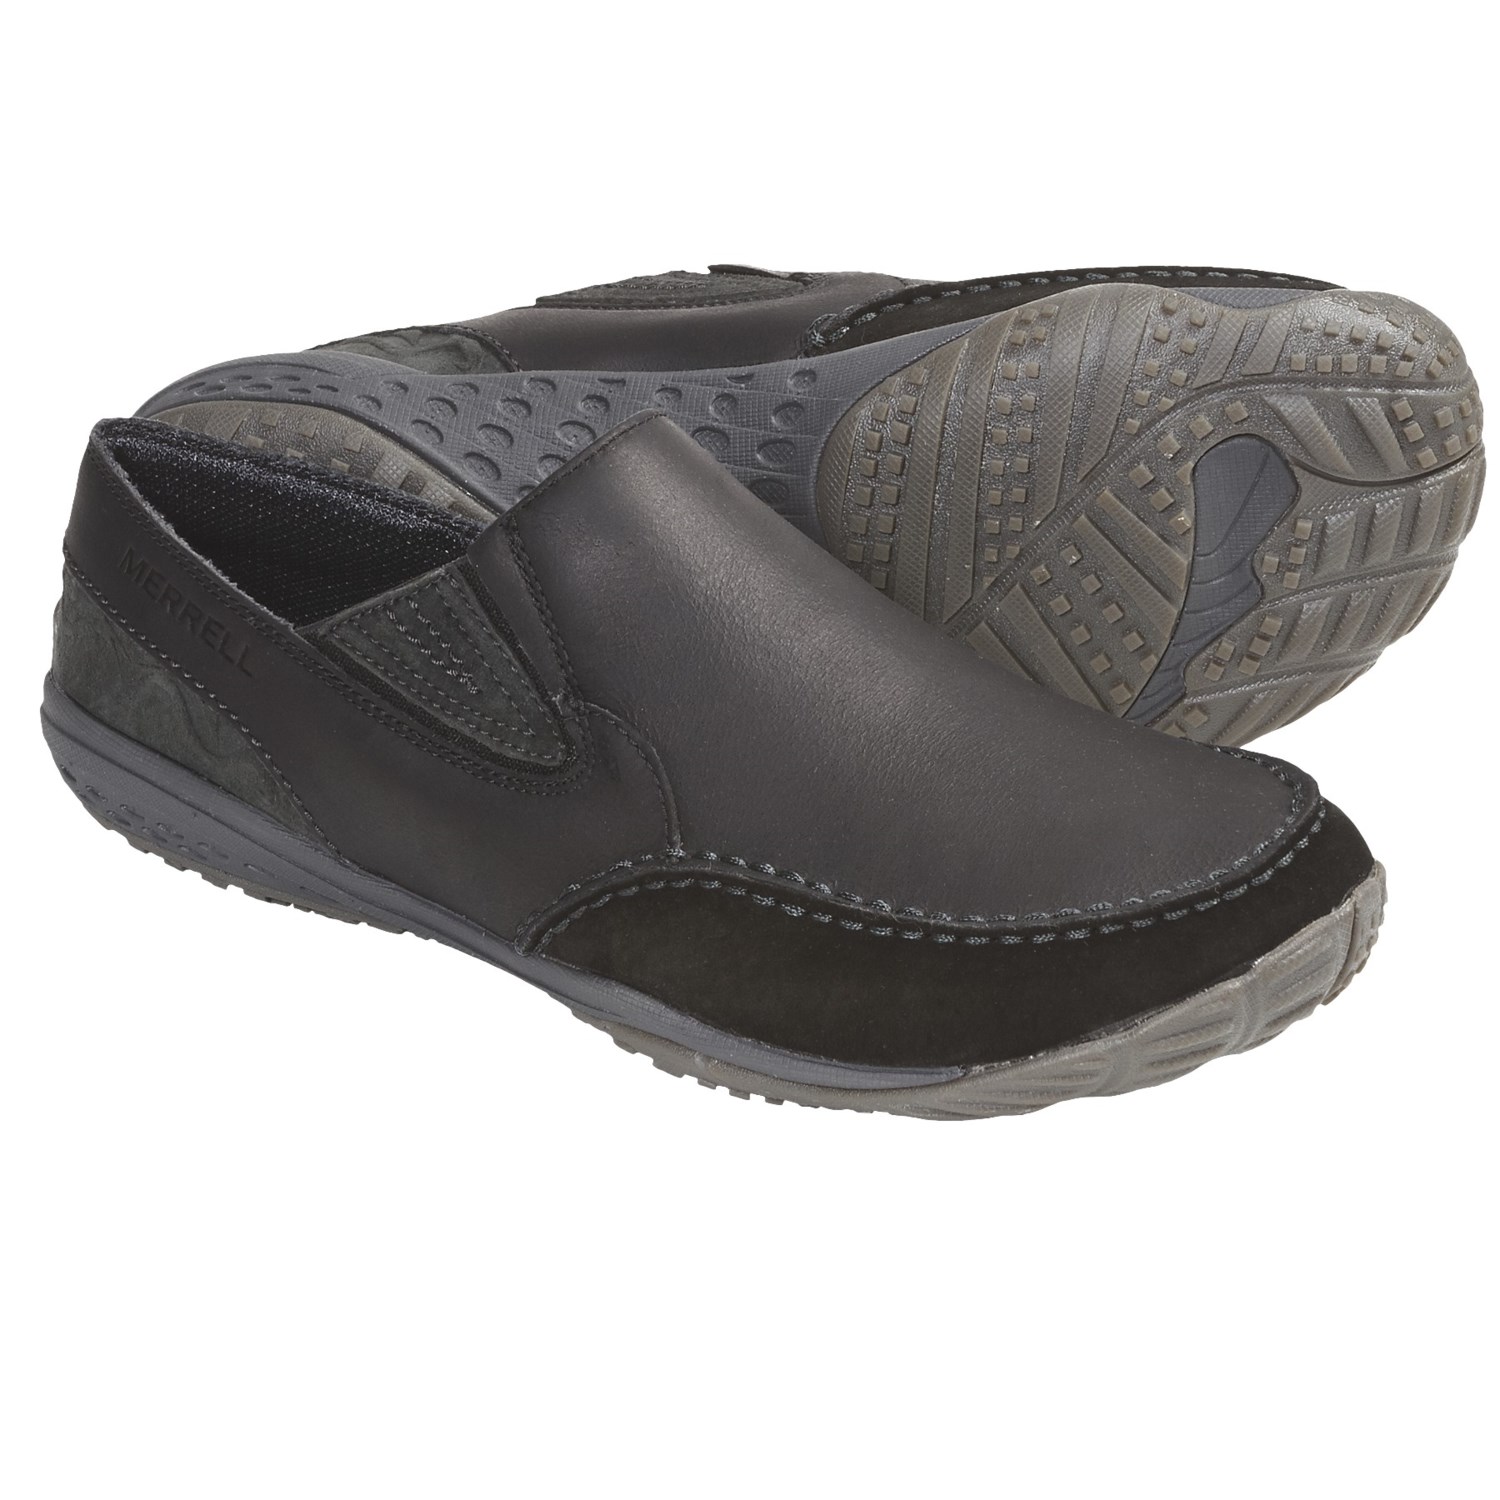 Merrell Barefoot Life Radius Glove Shoes (For Men) 5577M - Save 24%